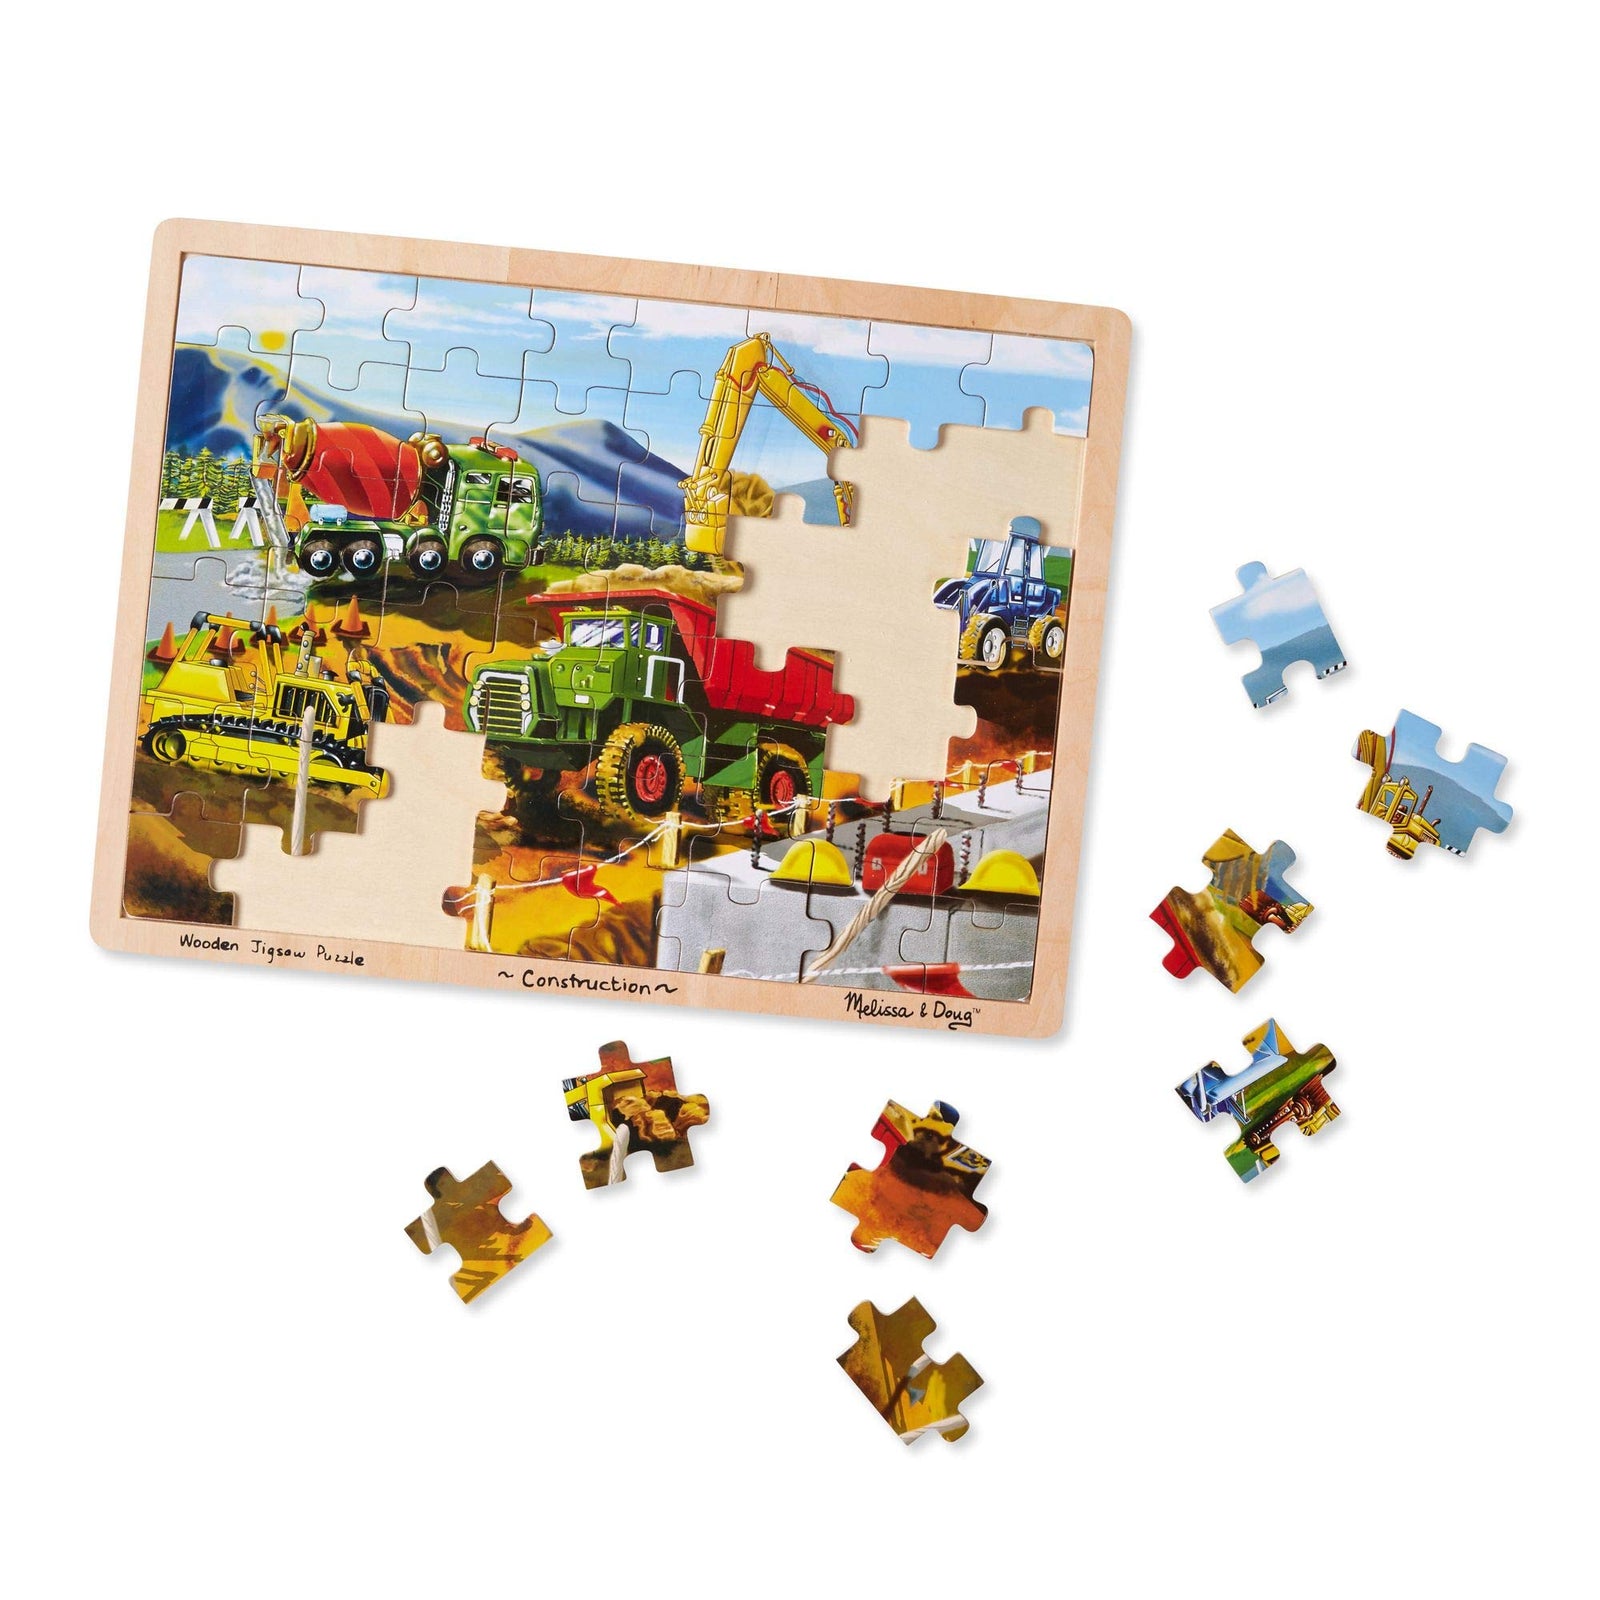 Melissa & Doug Construction Vehicles Wooden Jigsaw Puzzle With Storage Tray (48 pcs)